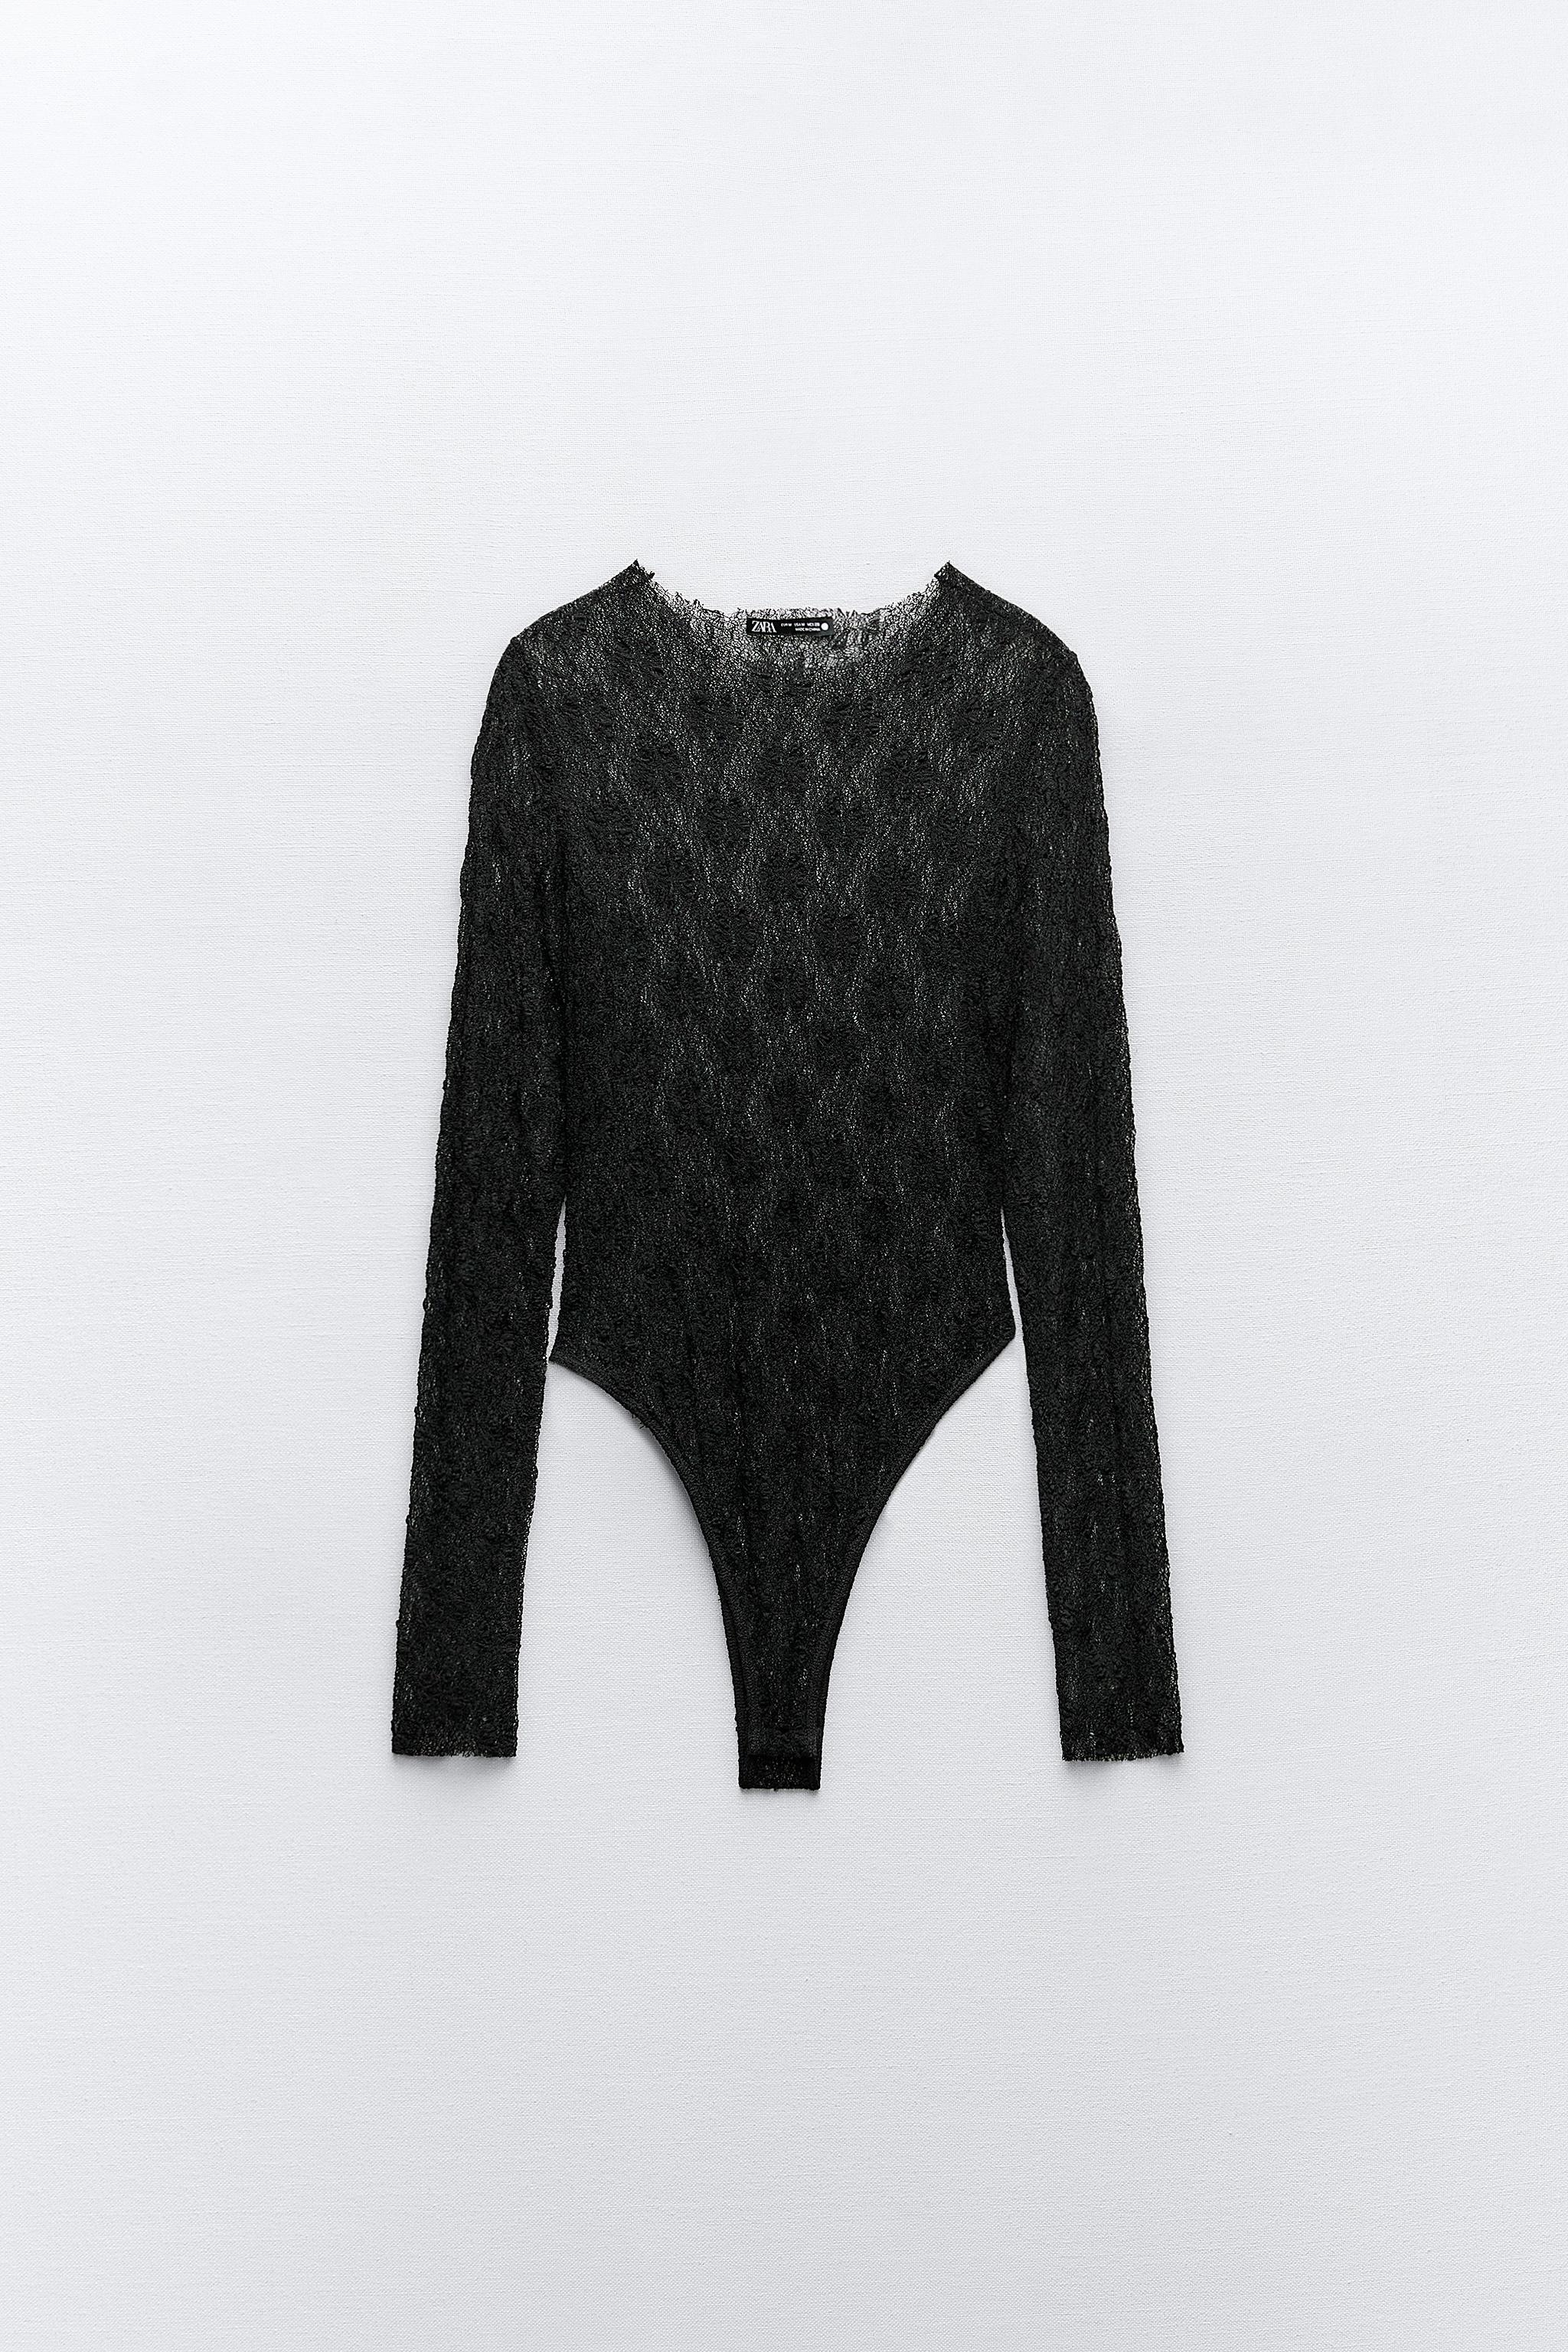 ZARA Black Lace Bodysuit NWT  Black lace bodysuit, Lace bodysuit